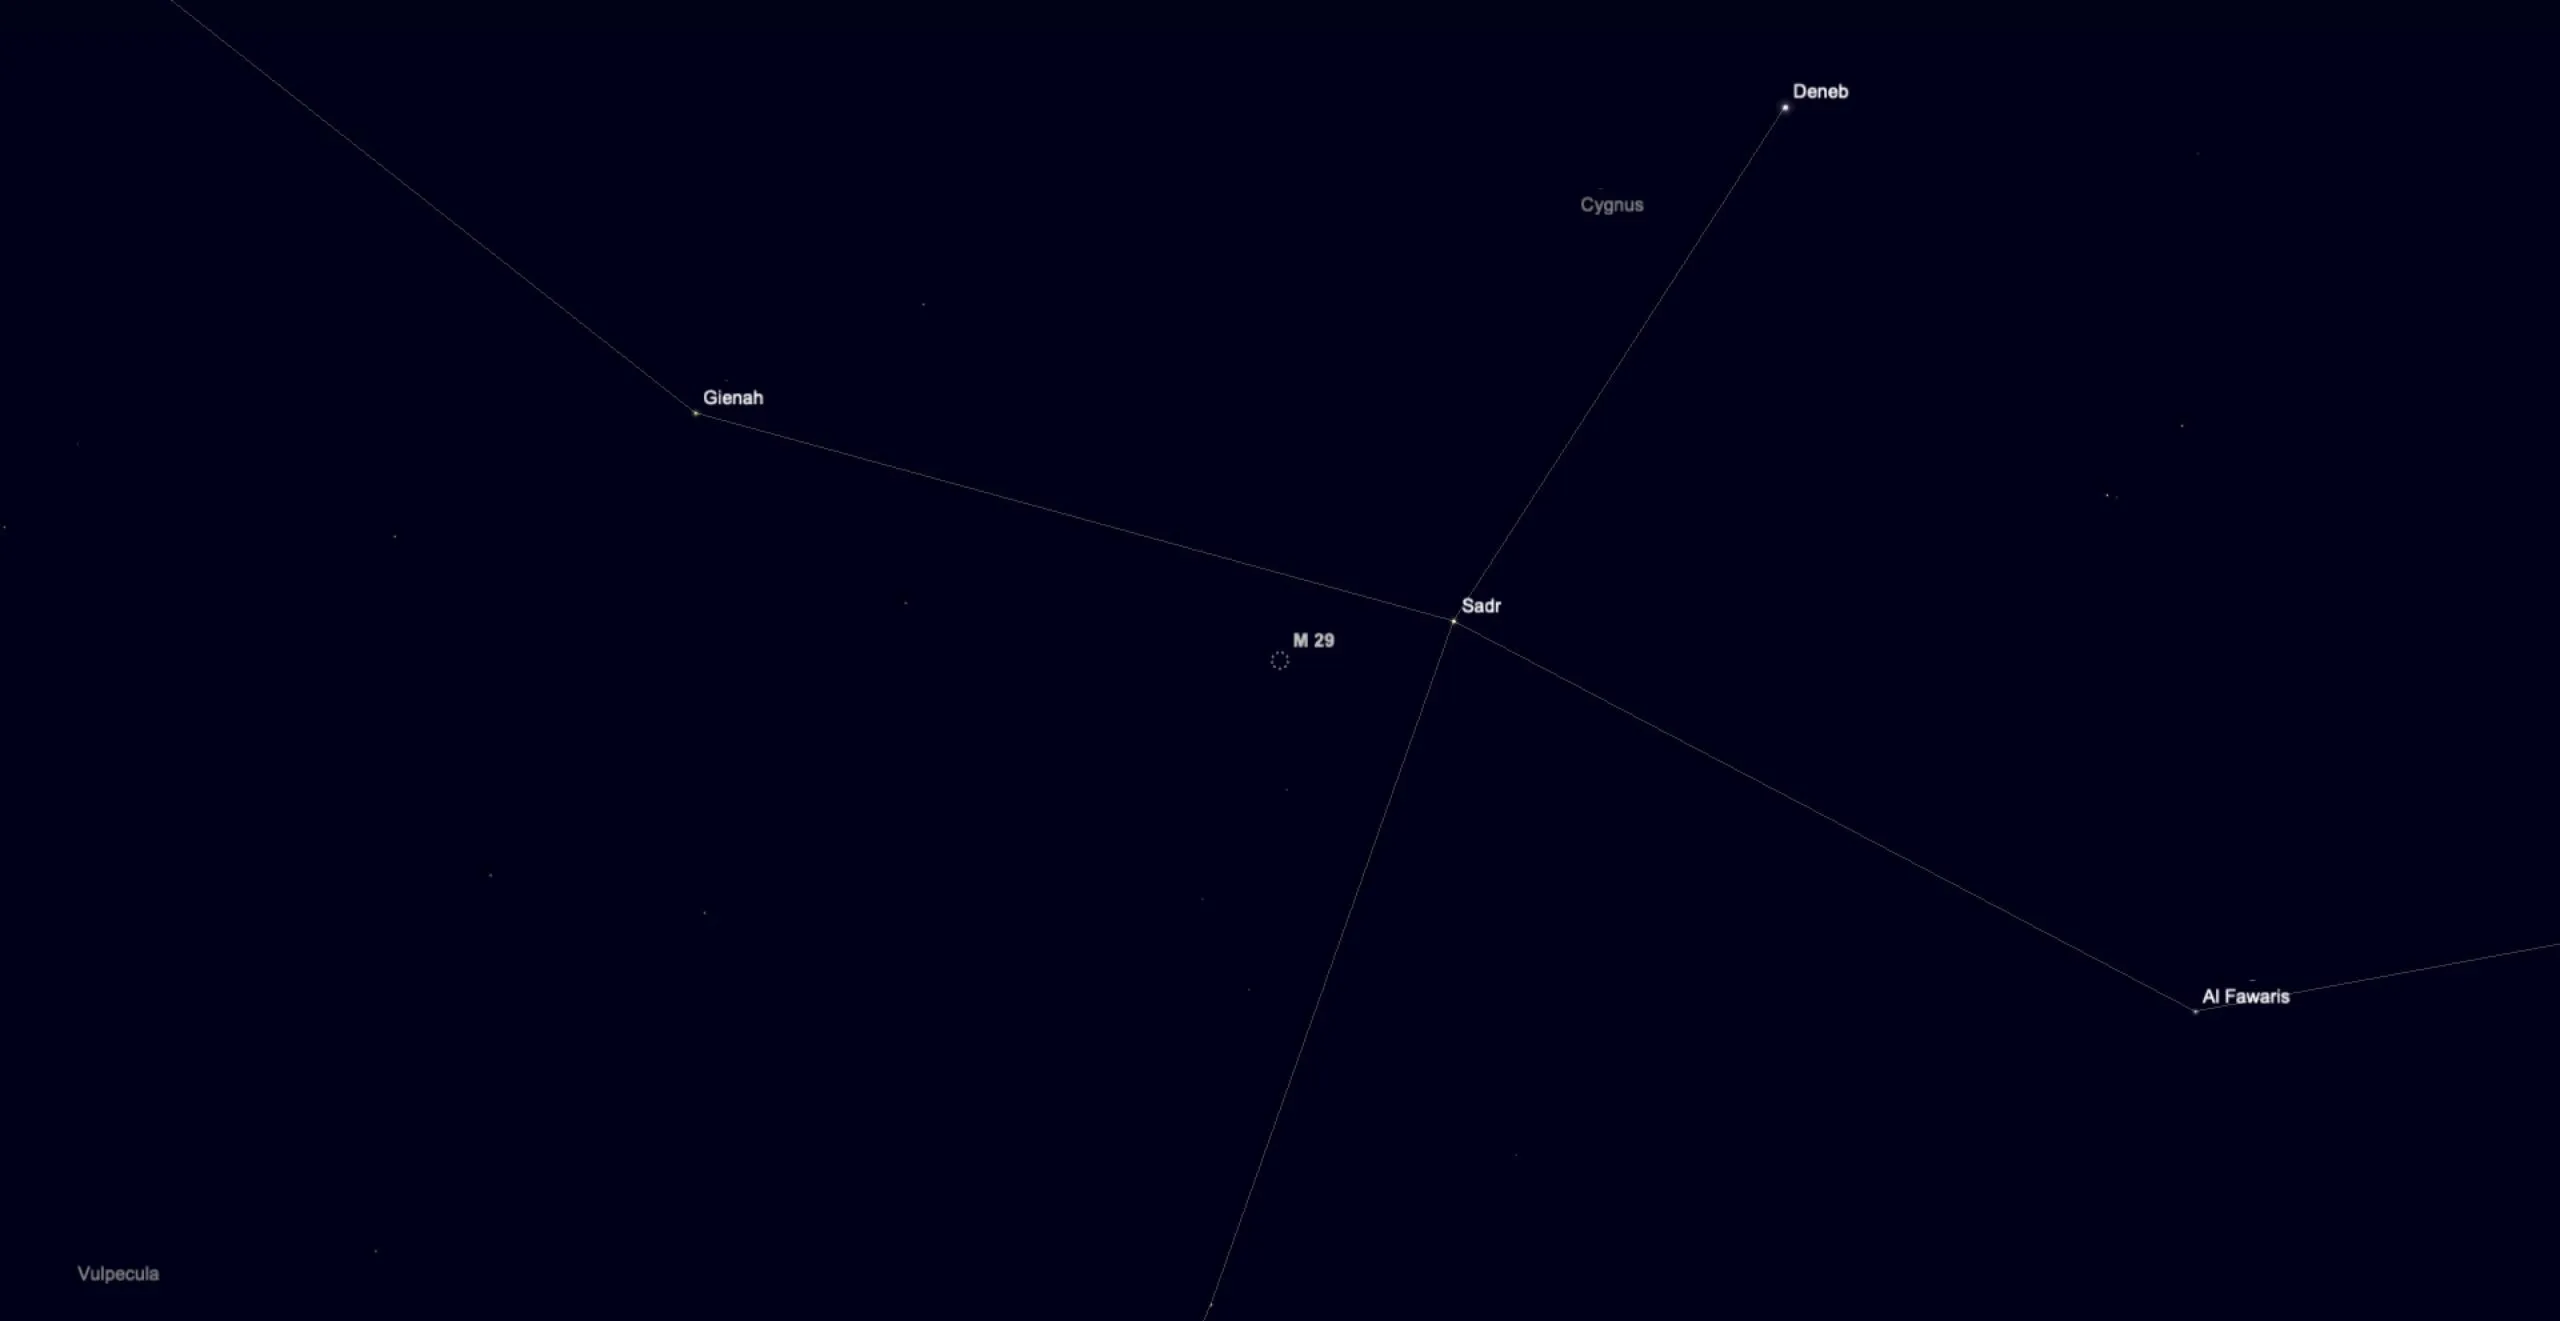 The open star cluster M29 in Cygnus